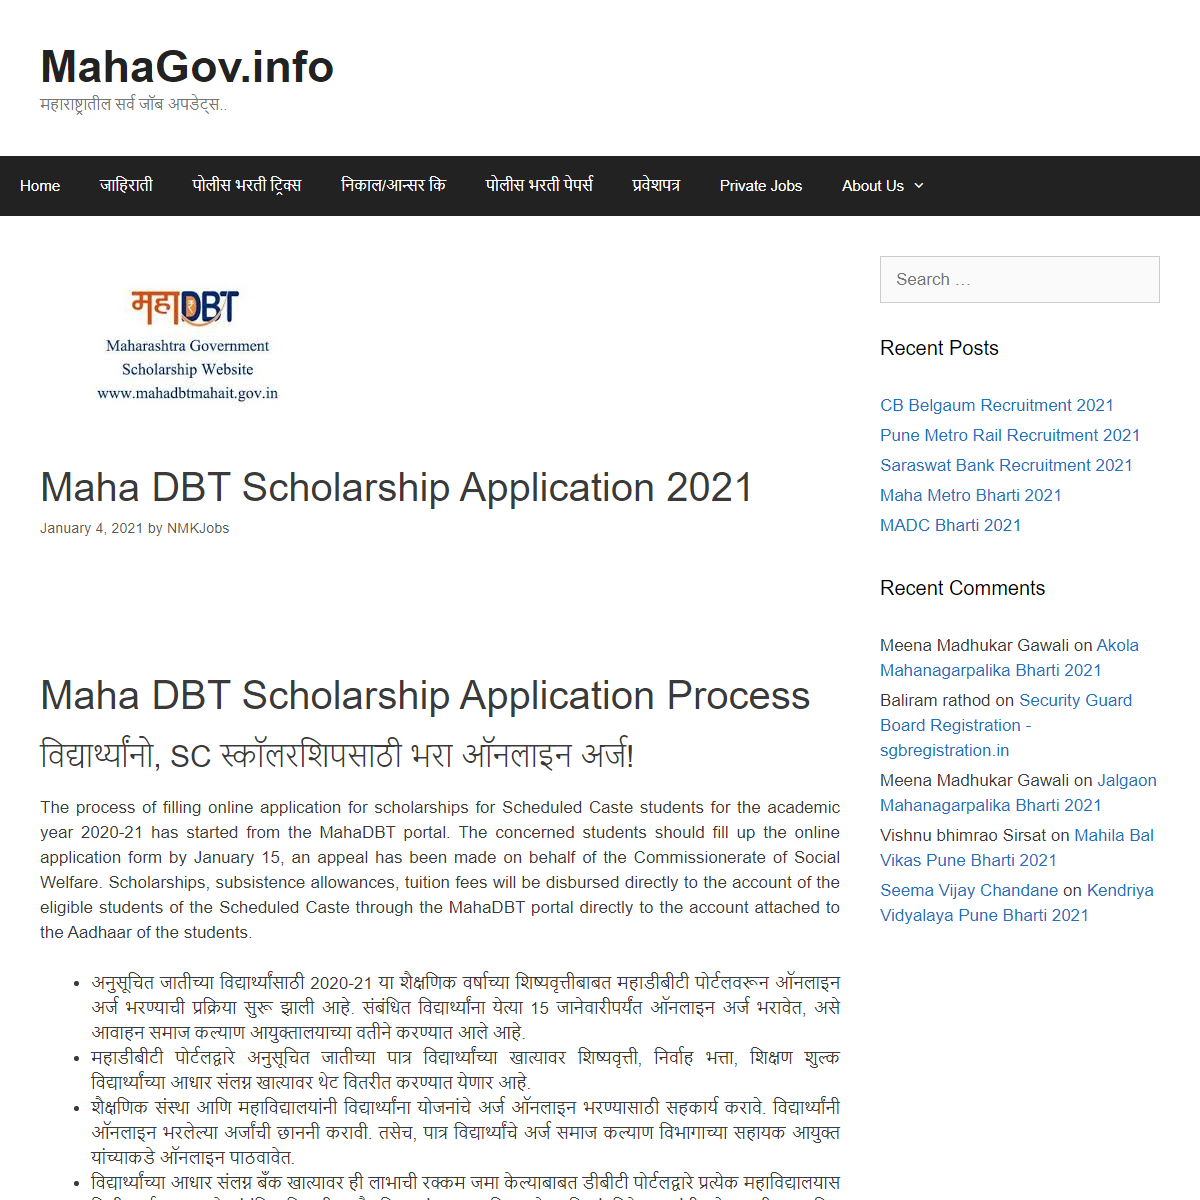 A complete backup of https://mahagov.info/maha-dbt-scholarship-application-2021/